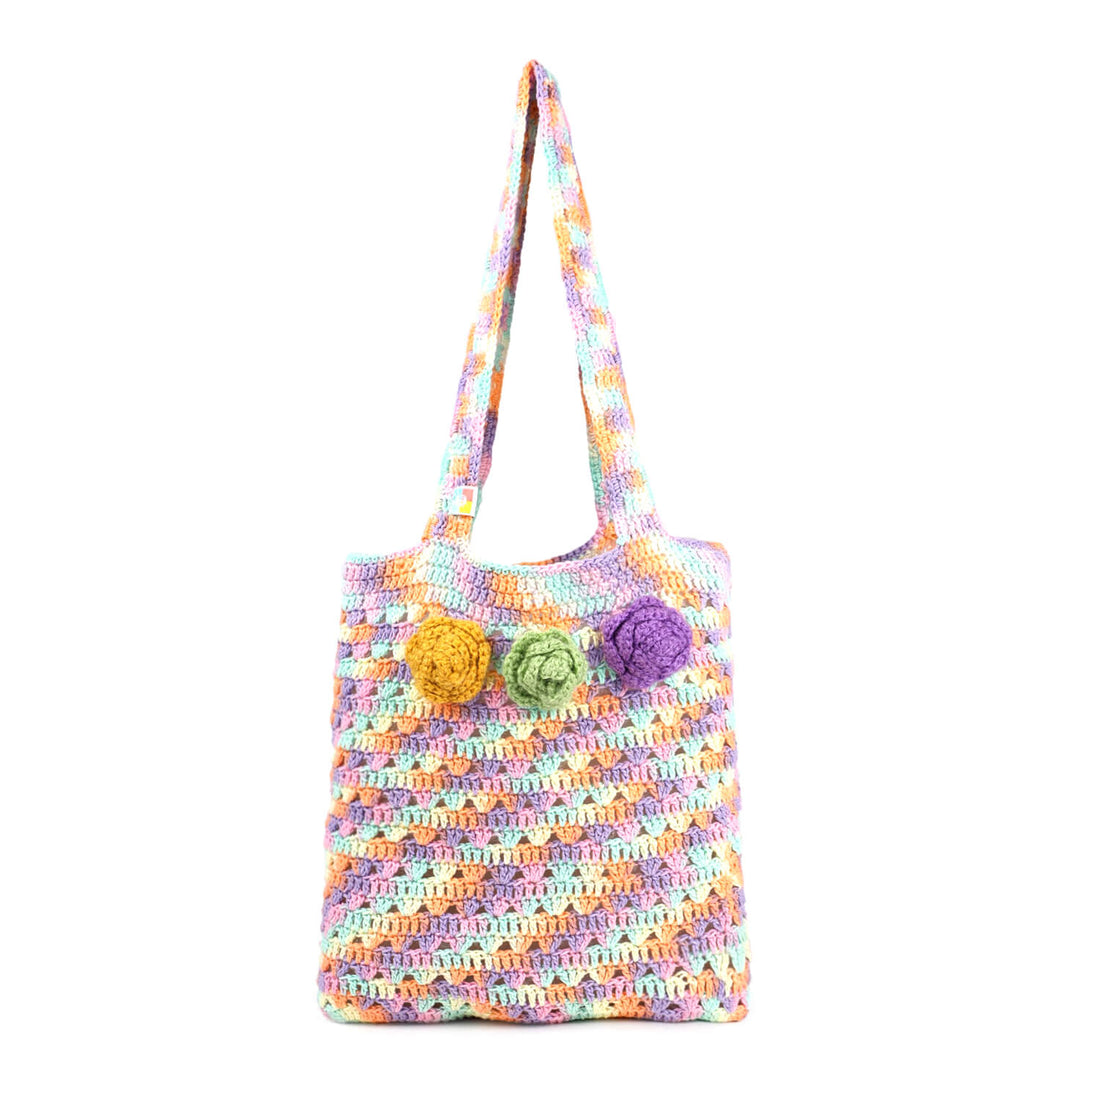 Handmade Crochet Market Bag - Multi-Color 2807